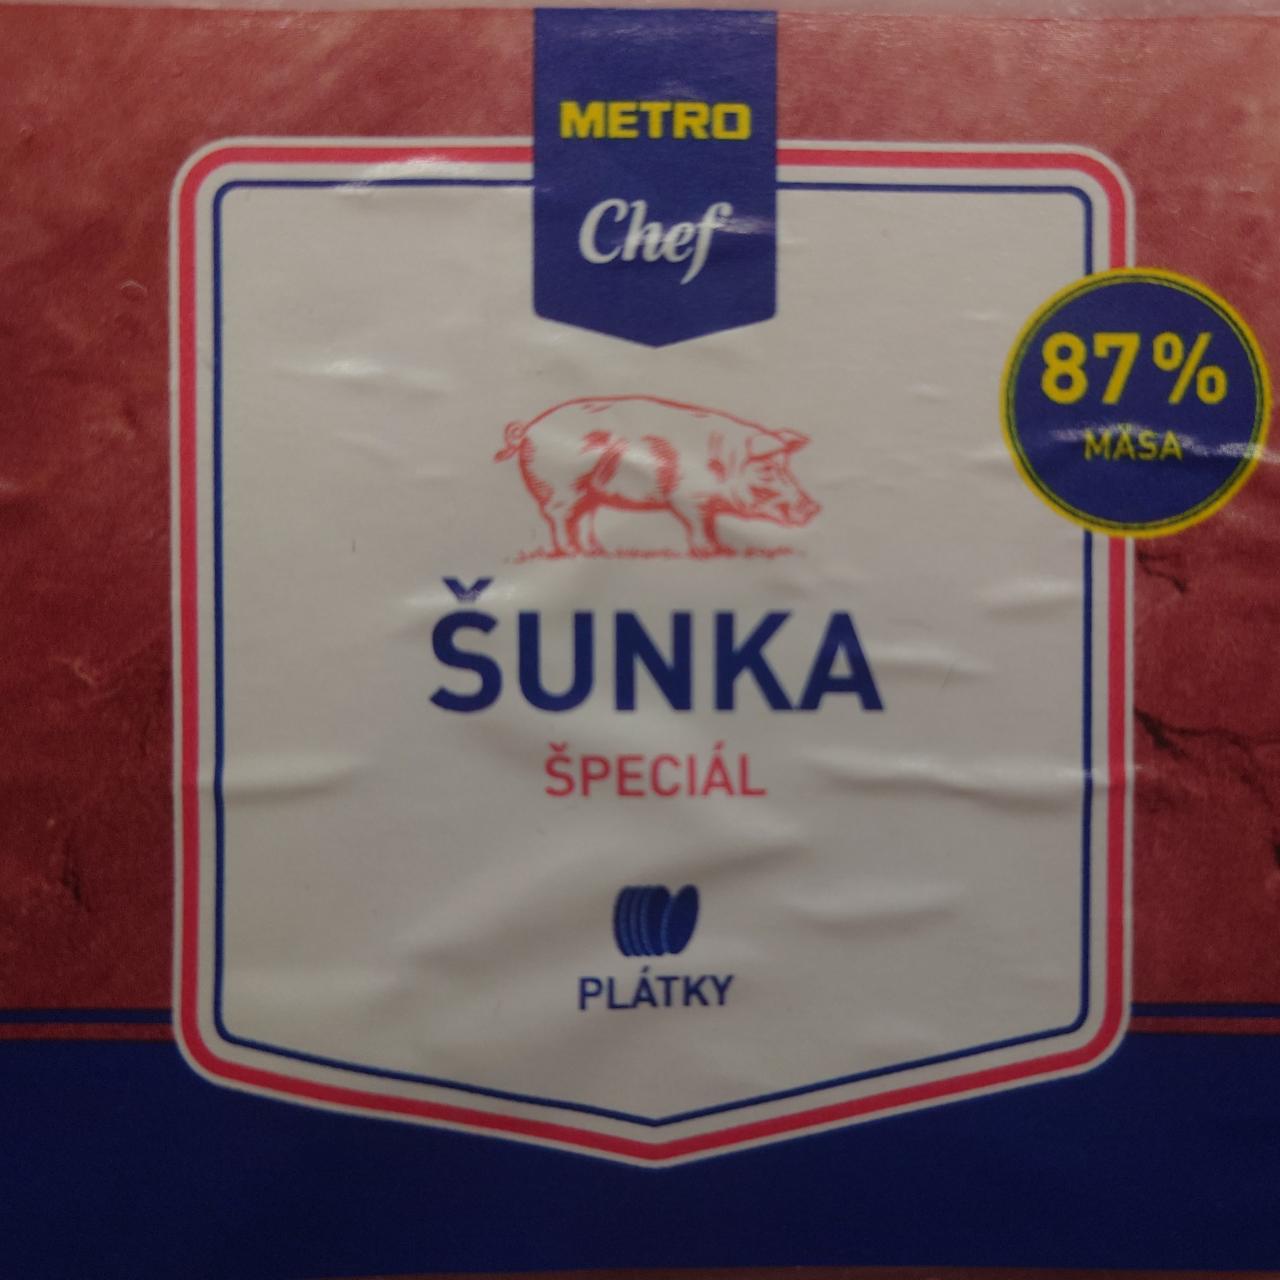 Fotografie - Šunka špeciál Metro Chef